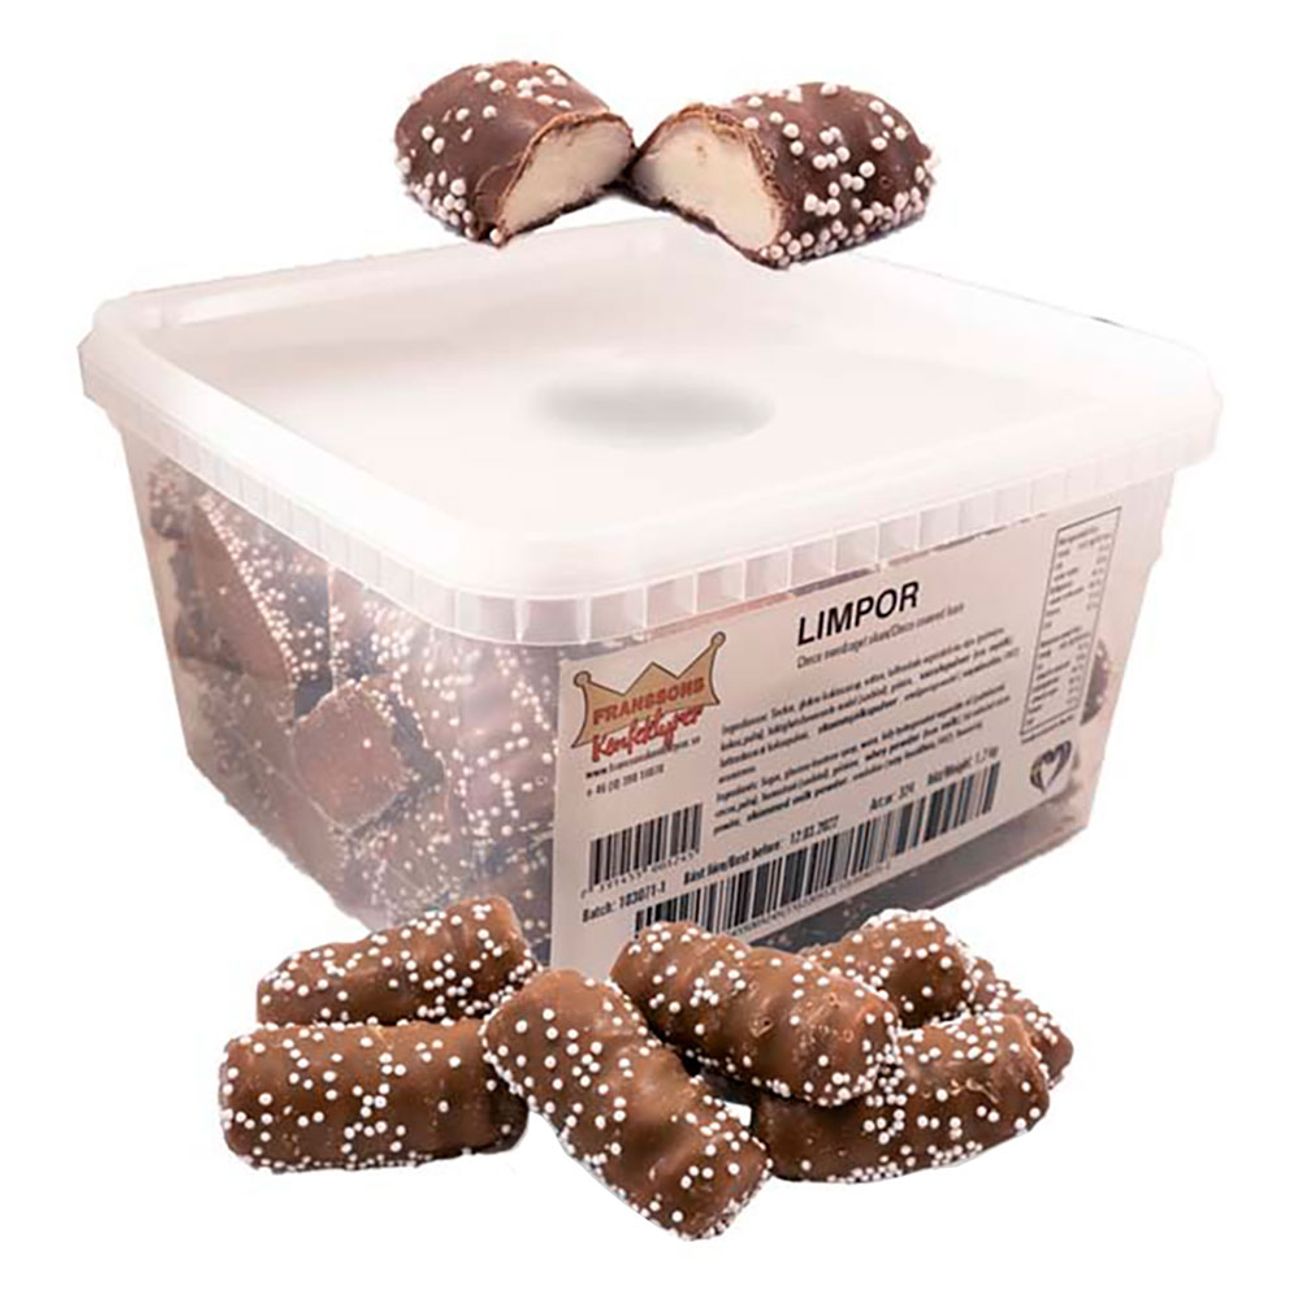 chokladlimpor-storpack-83457-1